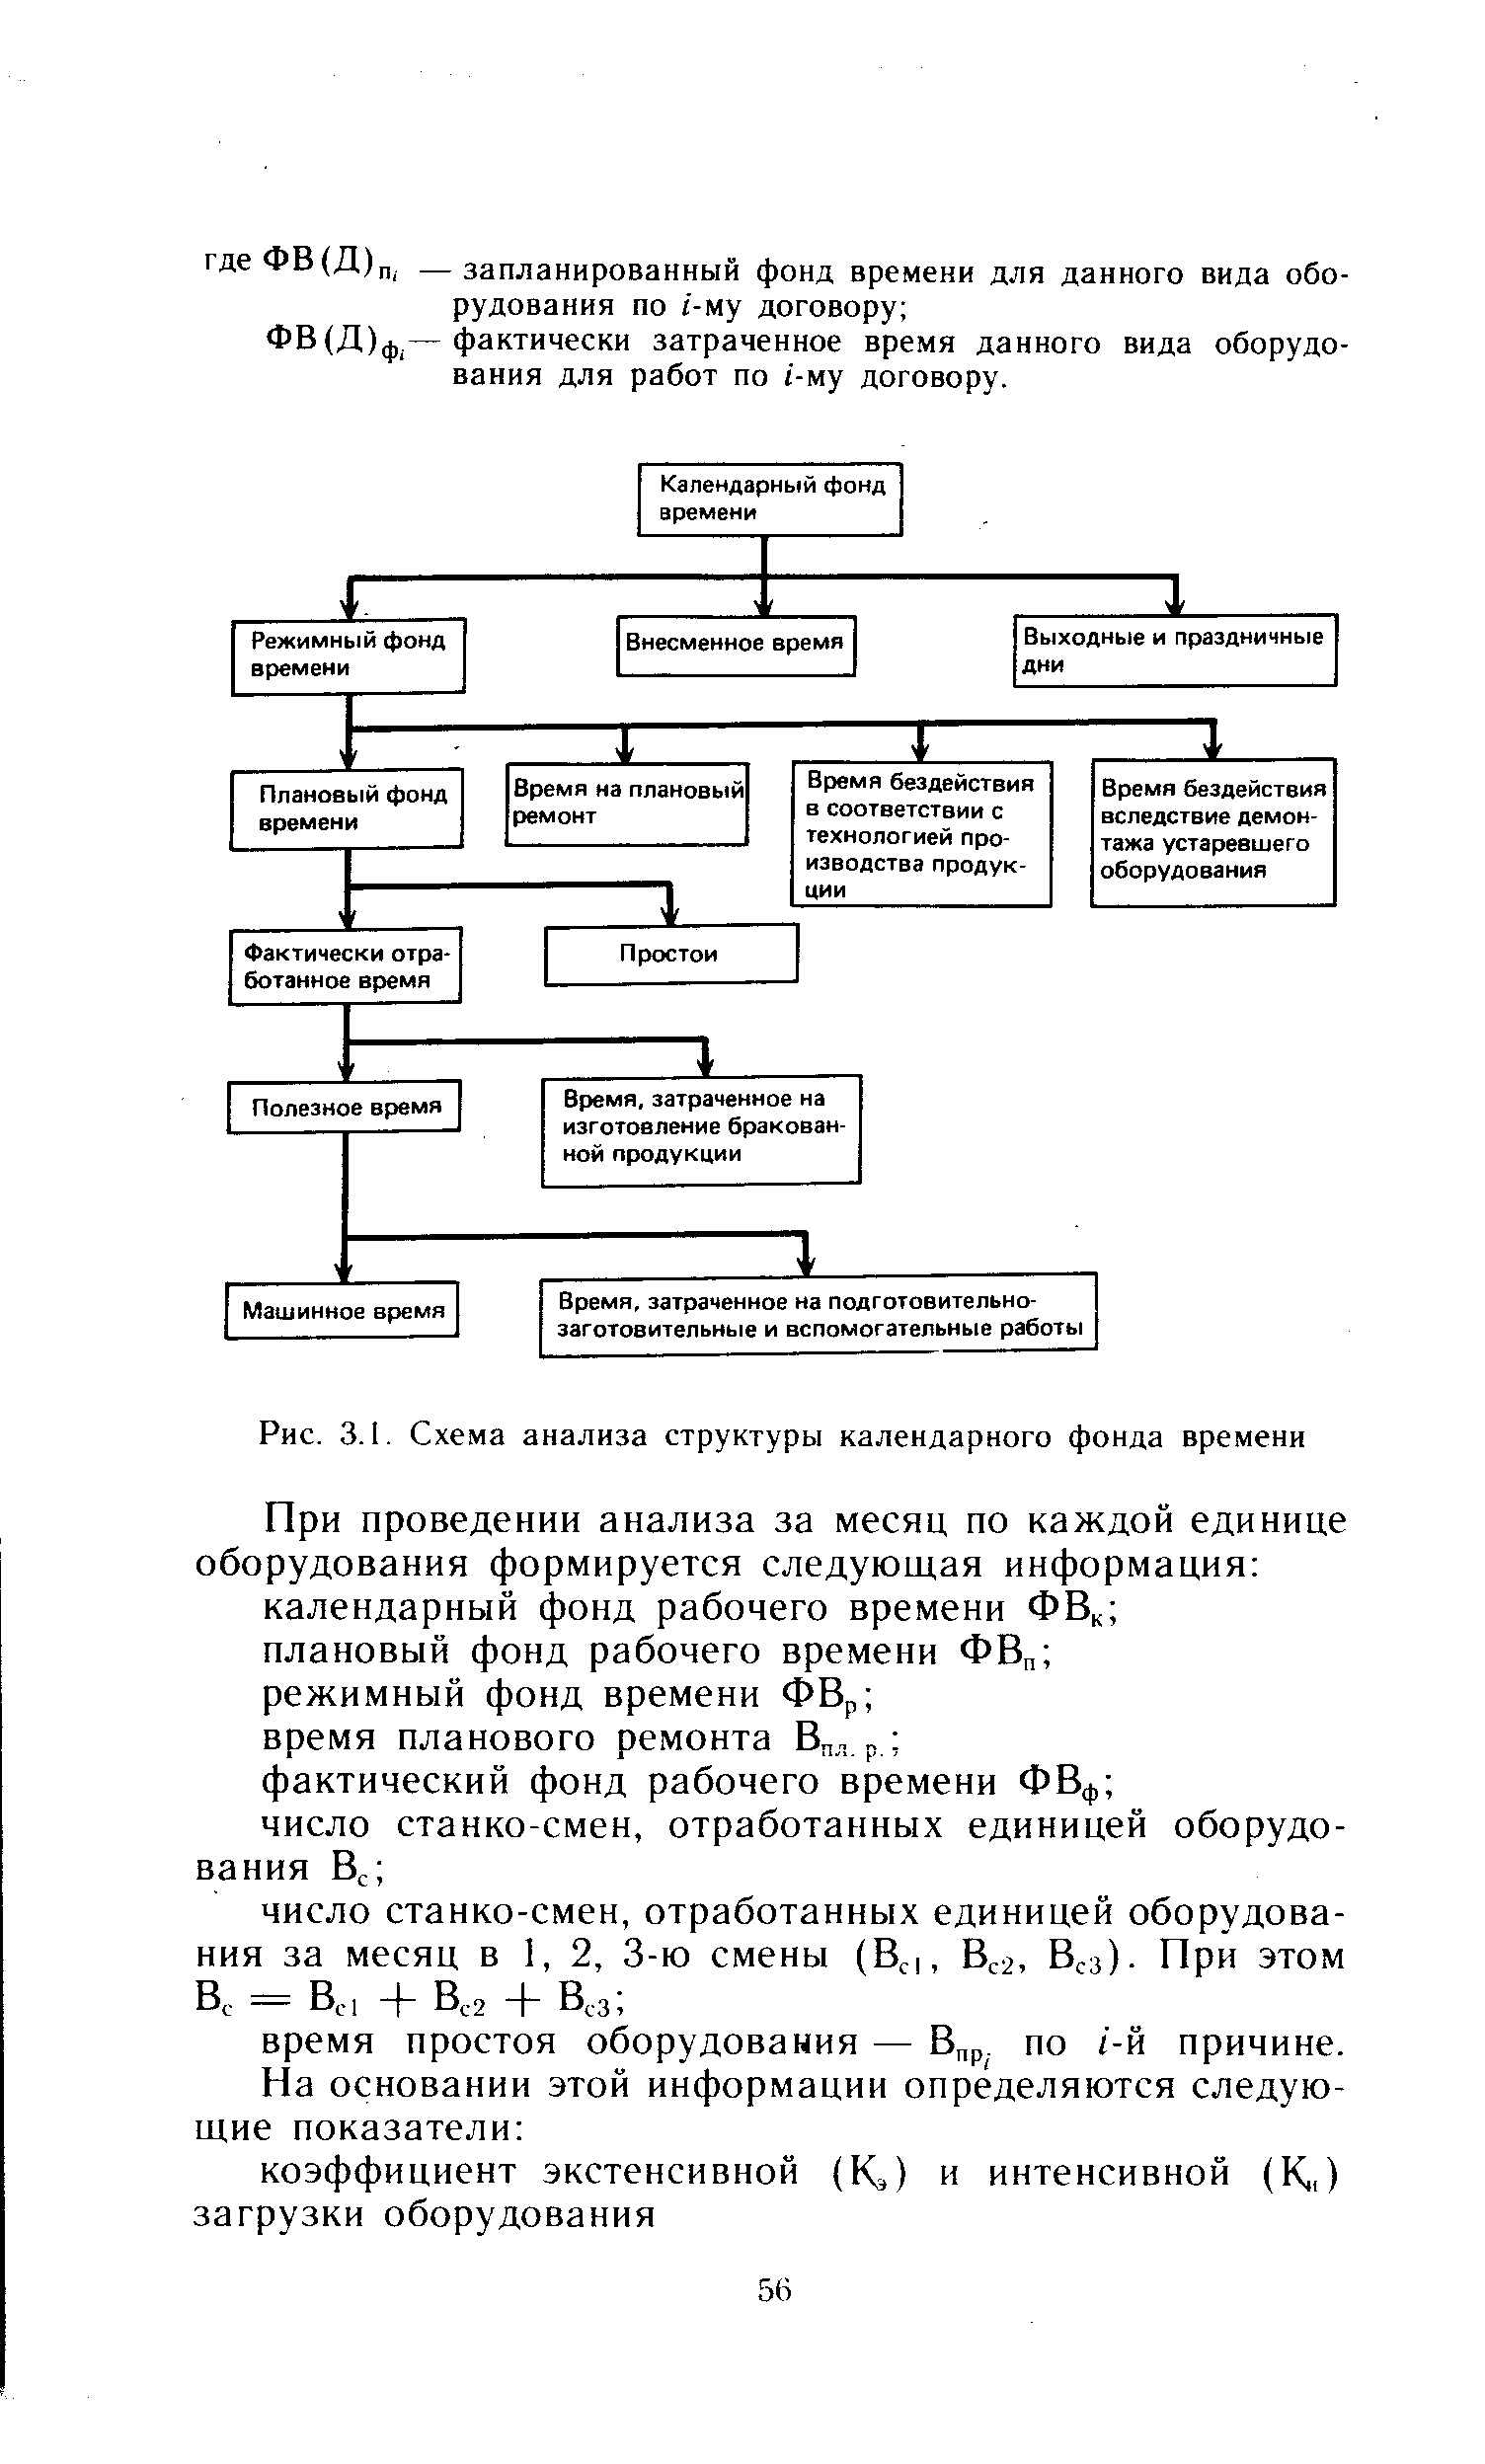 Рис. 3.1. Схема <a href="/info/195526">анализа структуры</a> календарного фонда времени
